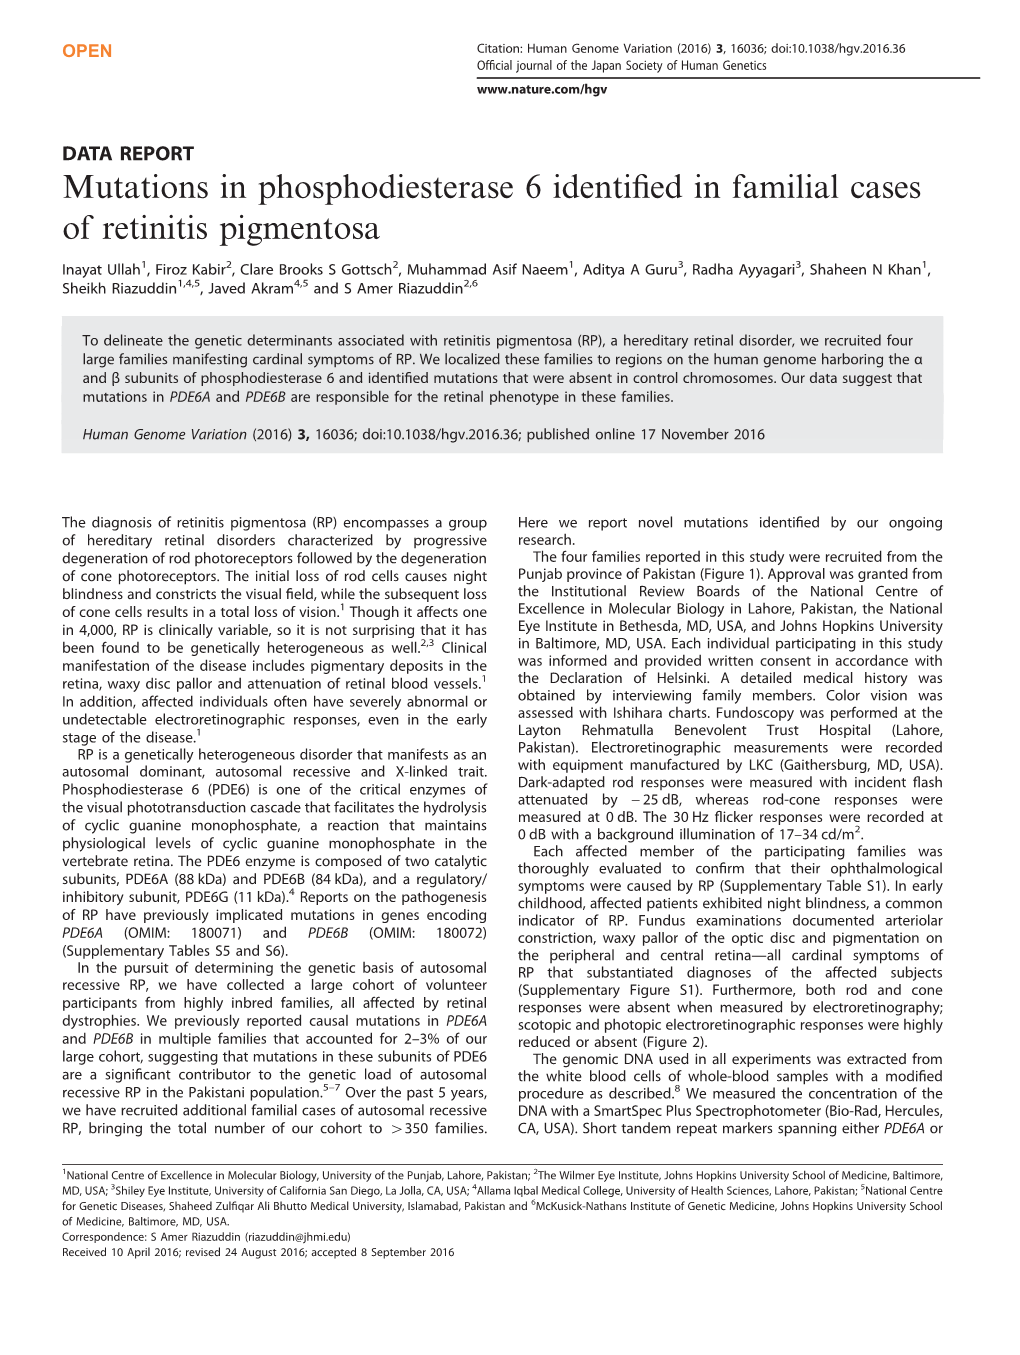 Mutations in Phosphodiesterase 6 Identified in Familial Cases of Retinitis Pigmentosa